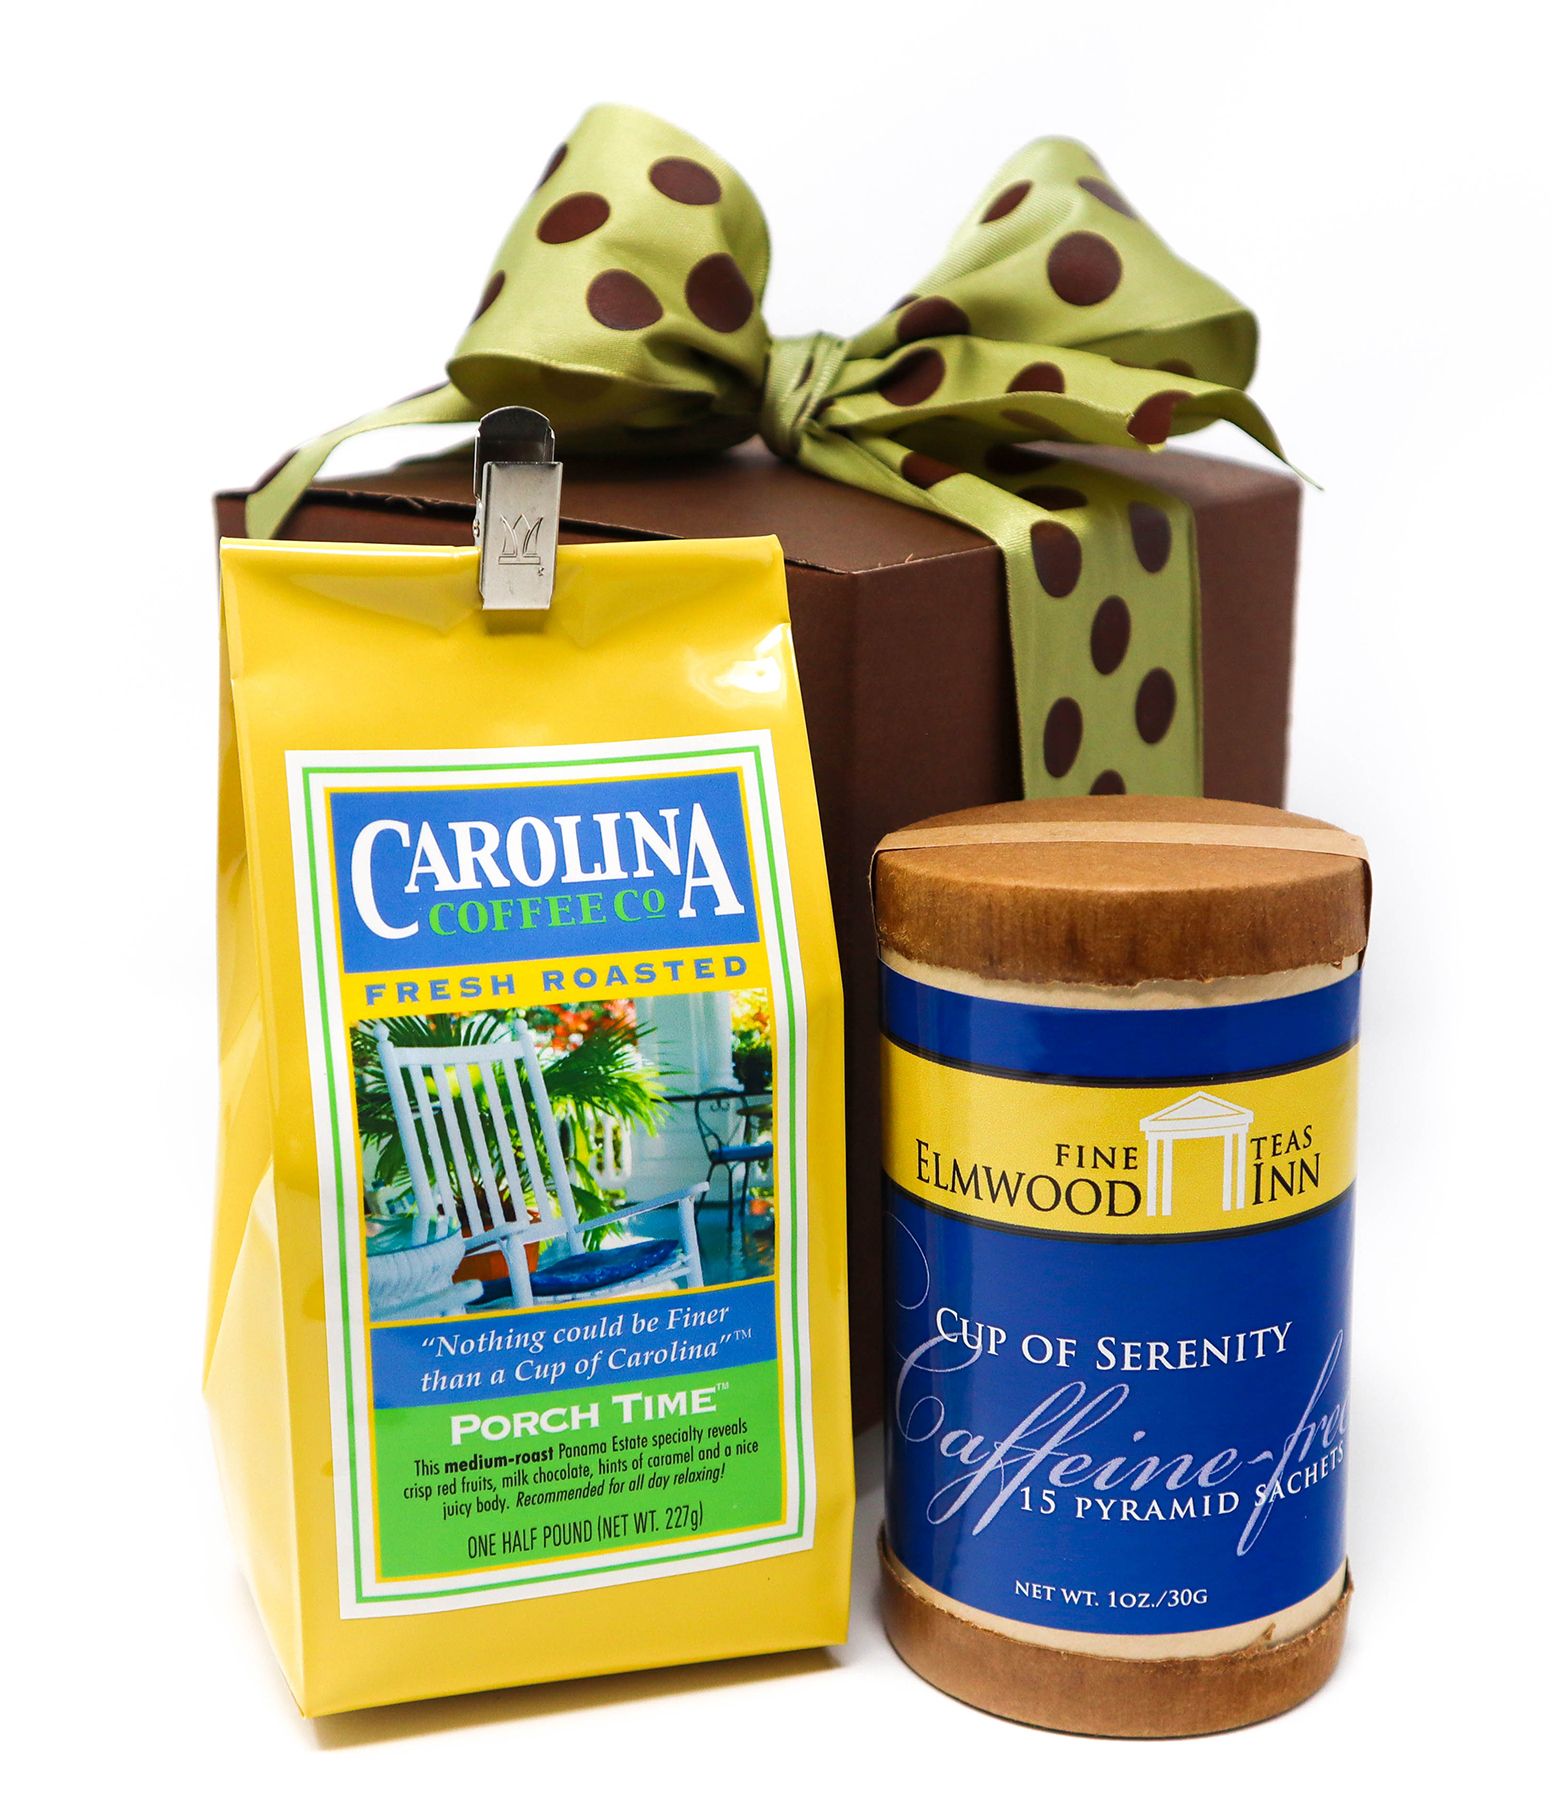 Carolina Coffee Coffee and Tea Gift Box